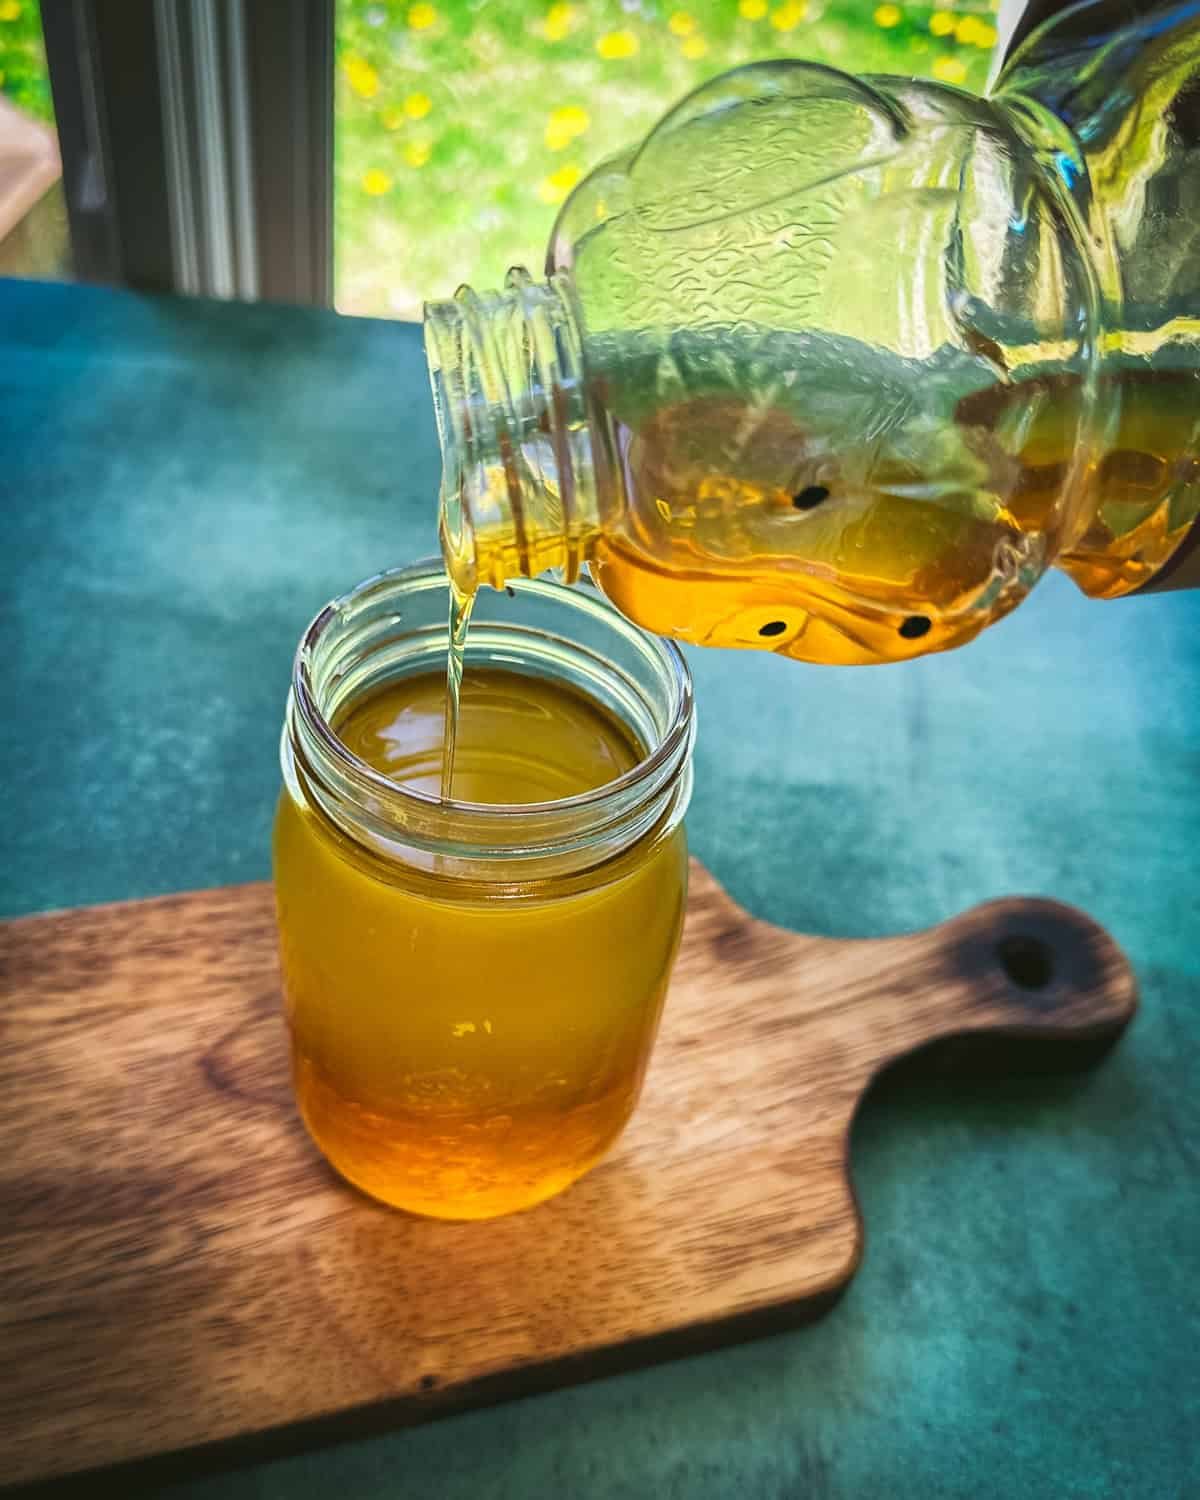 Honey pouring into the jar of dandelion tea. 